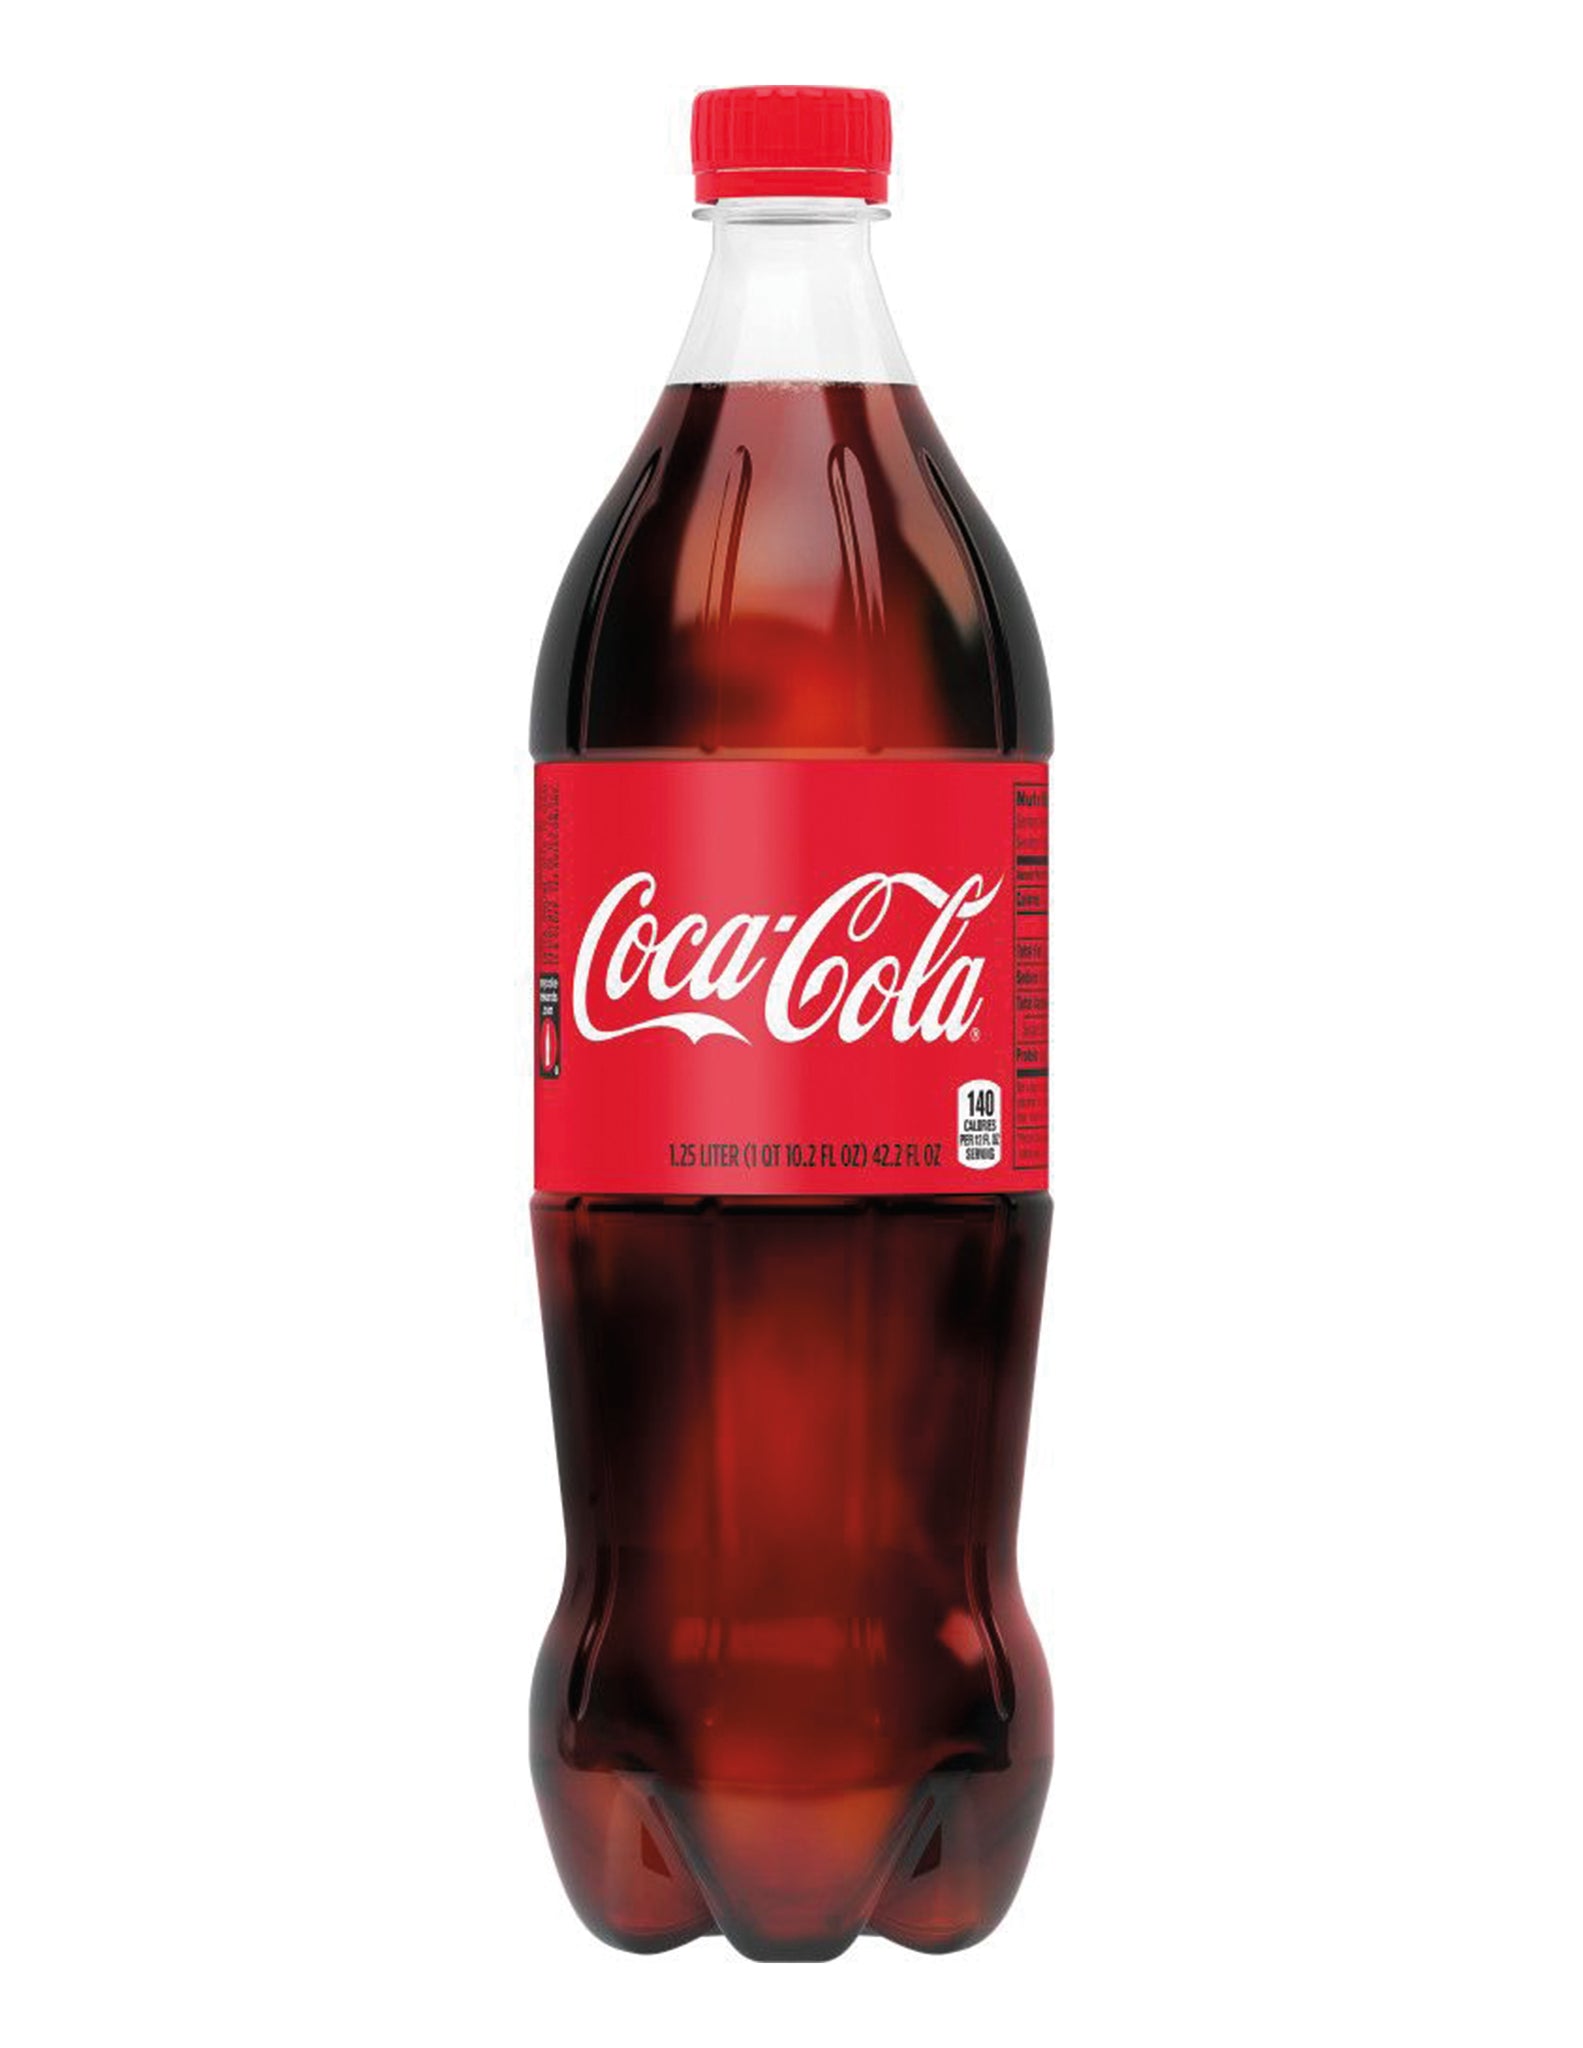 tha>Coke 1.25 litre bottle